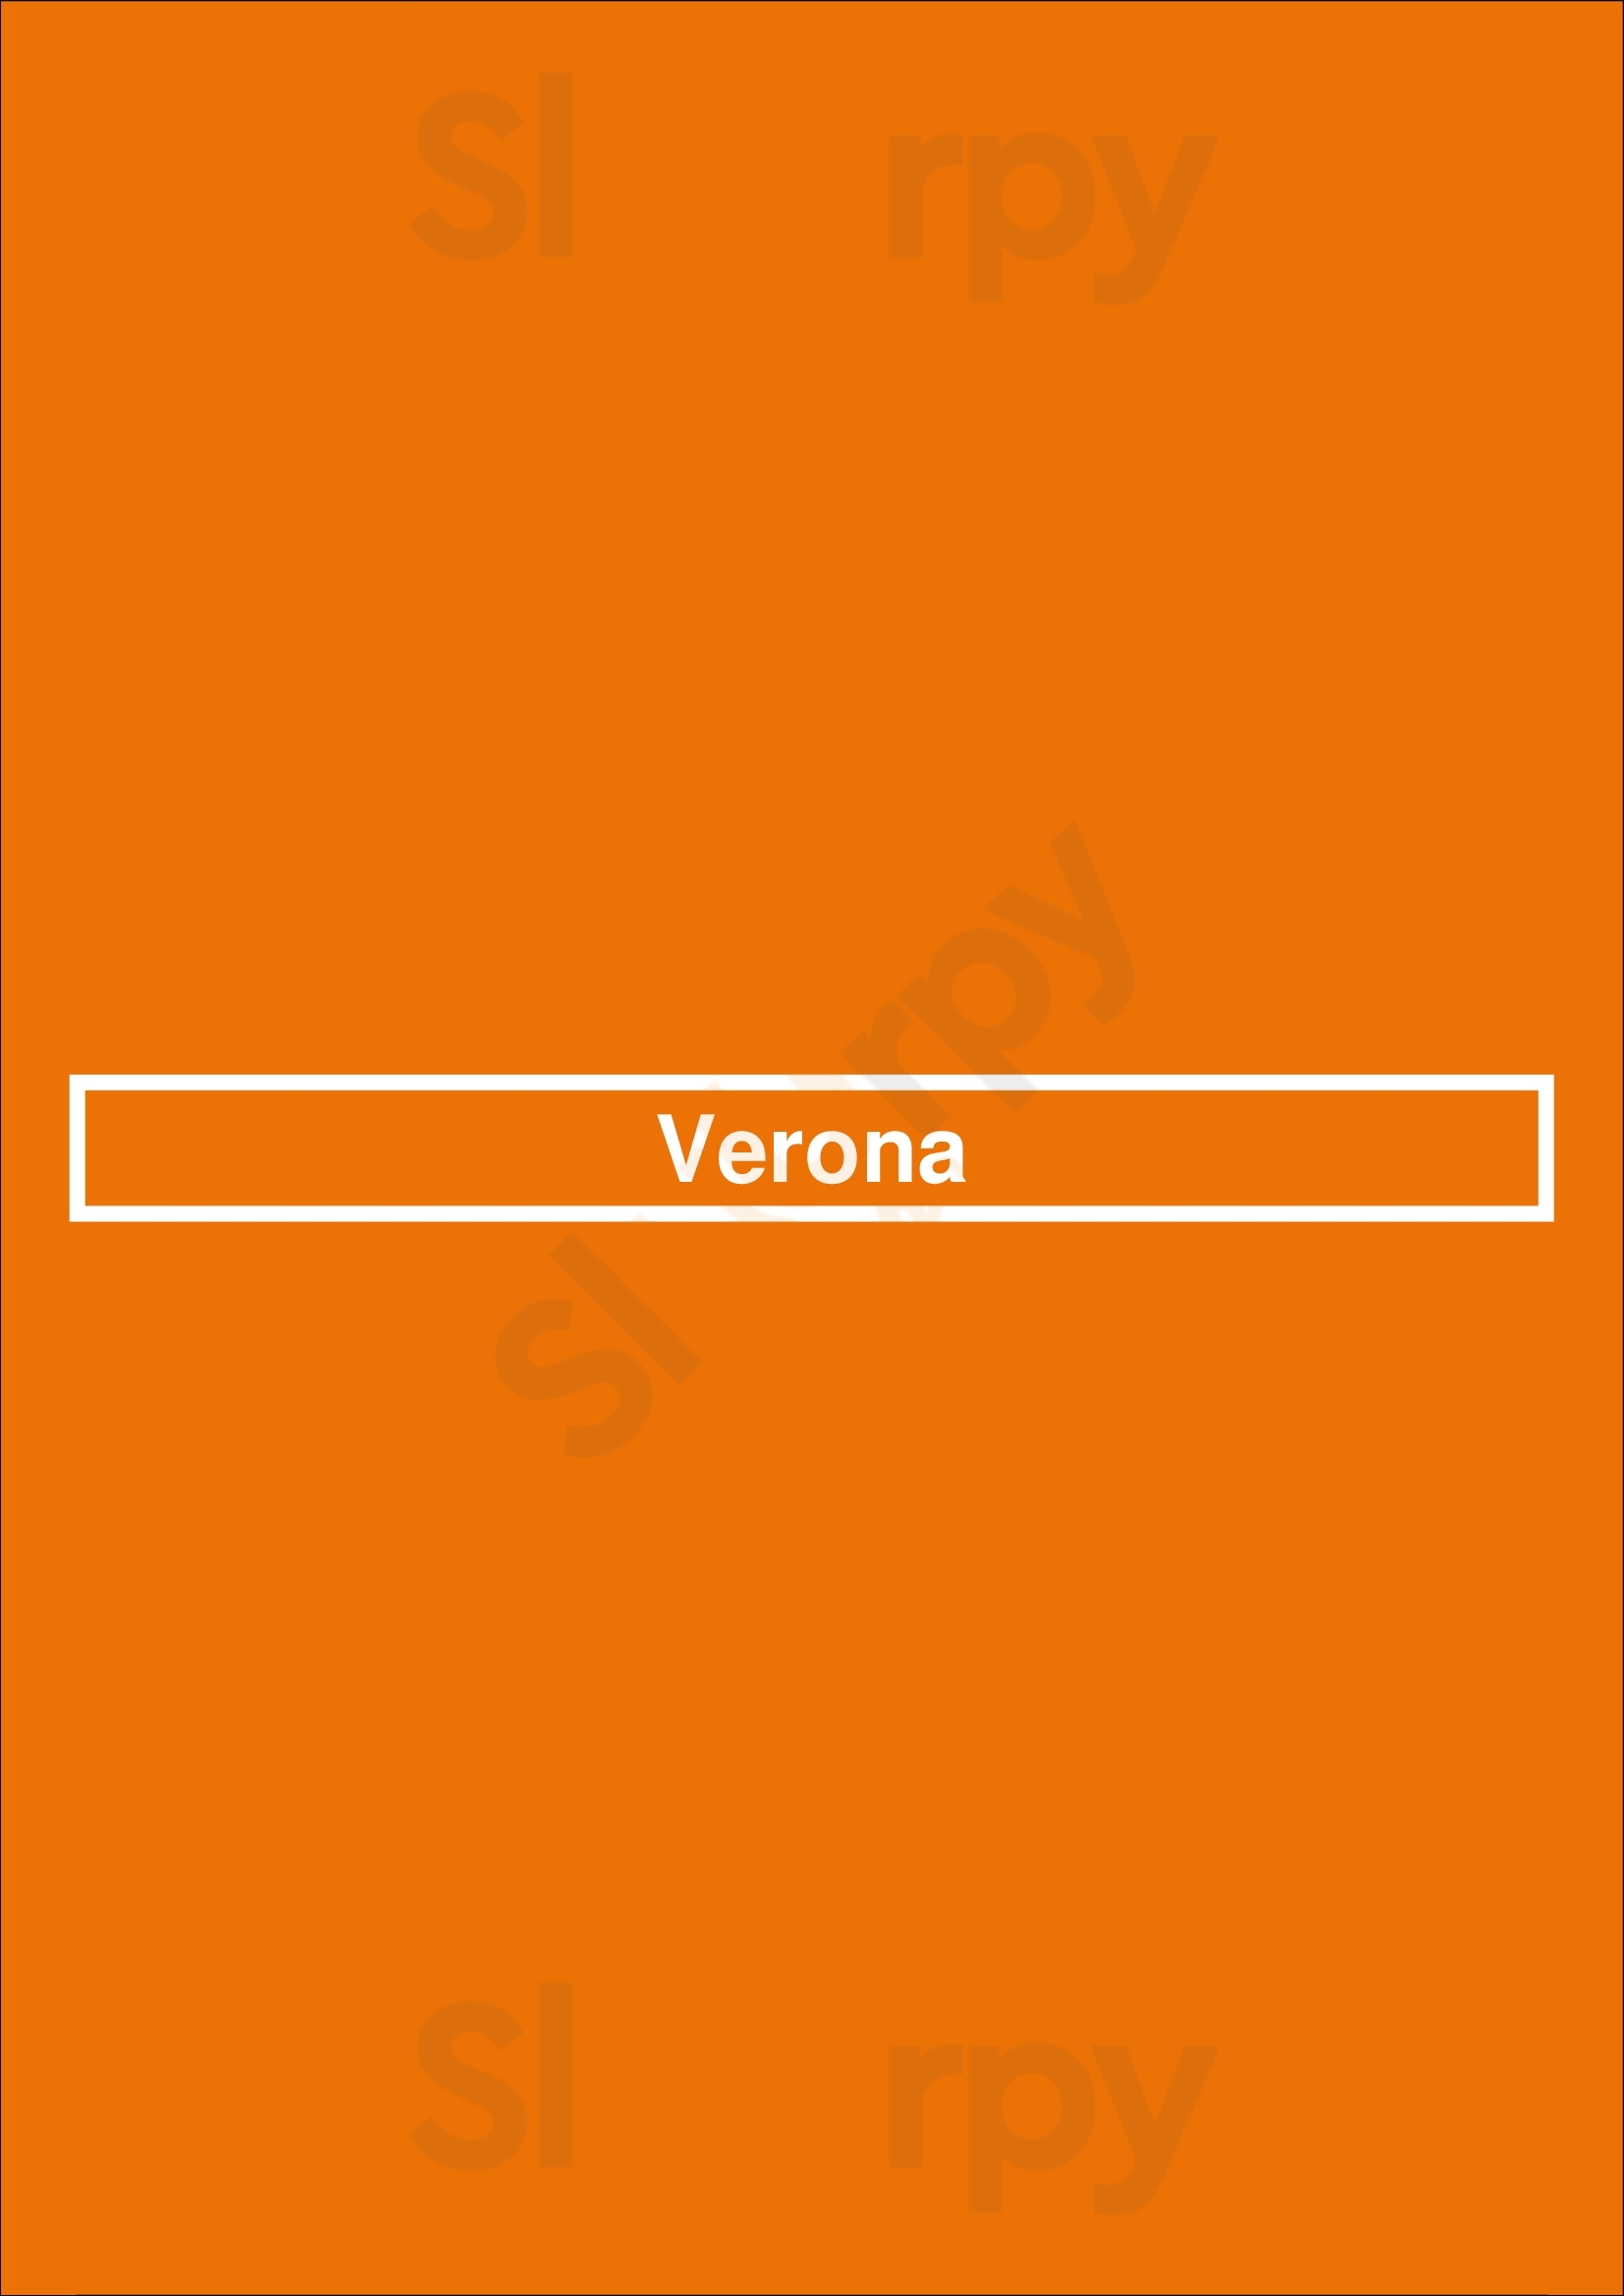 Verona Manchester Menu - 1